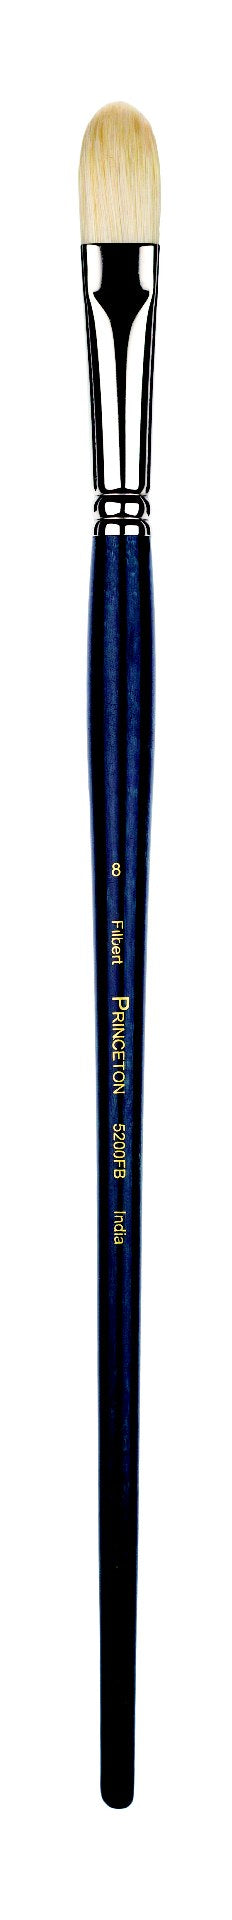 Princeton Art Brush 5200 Bristle Filbert Interlocked Chungking Bristle